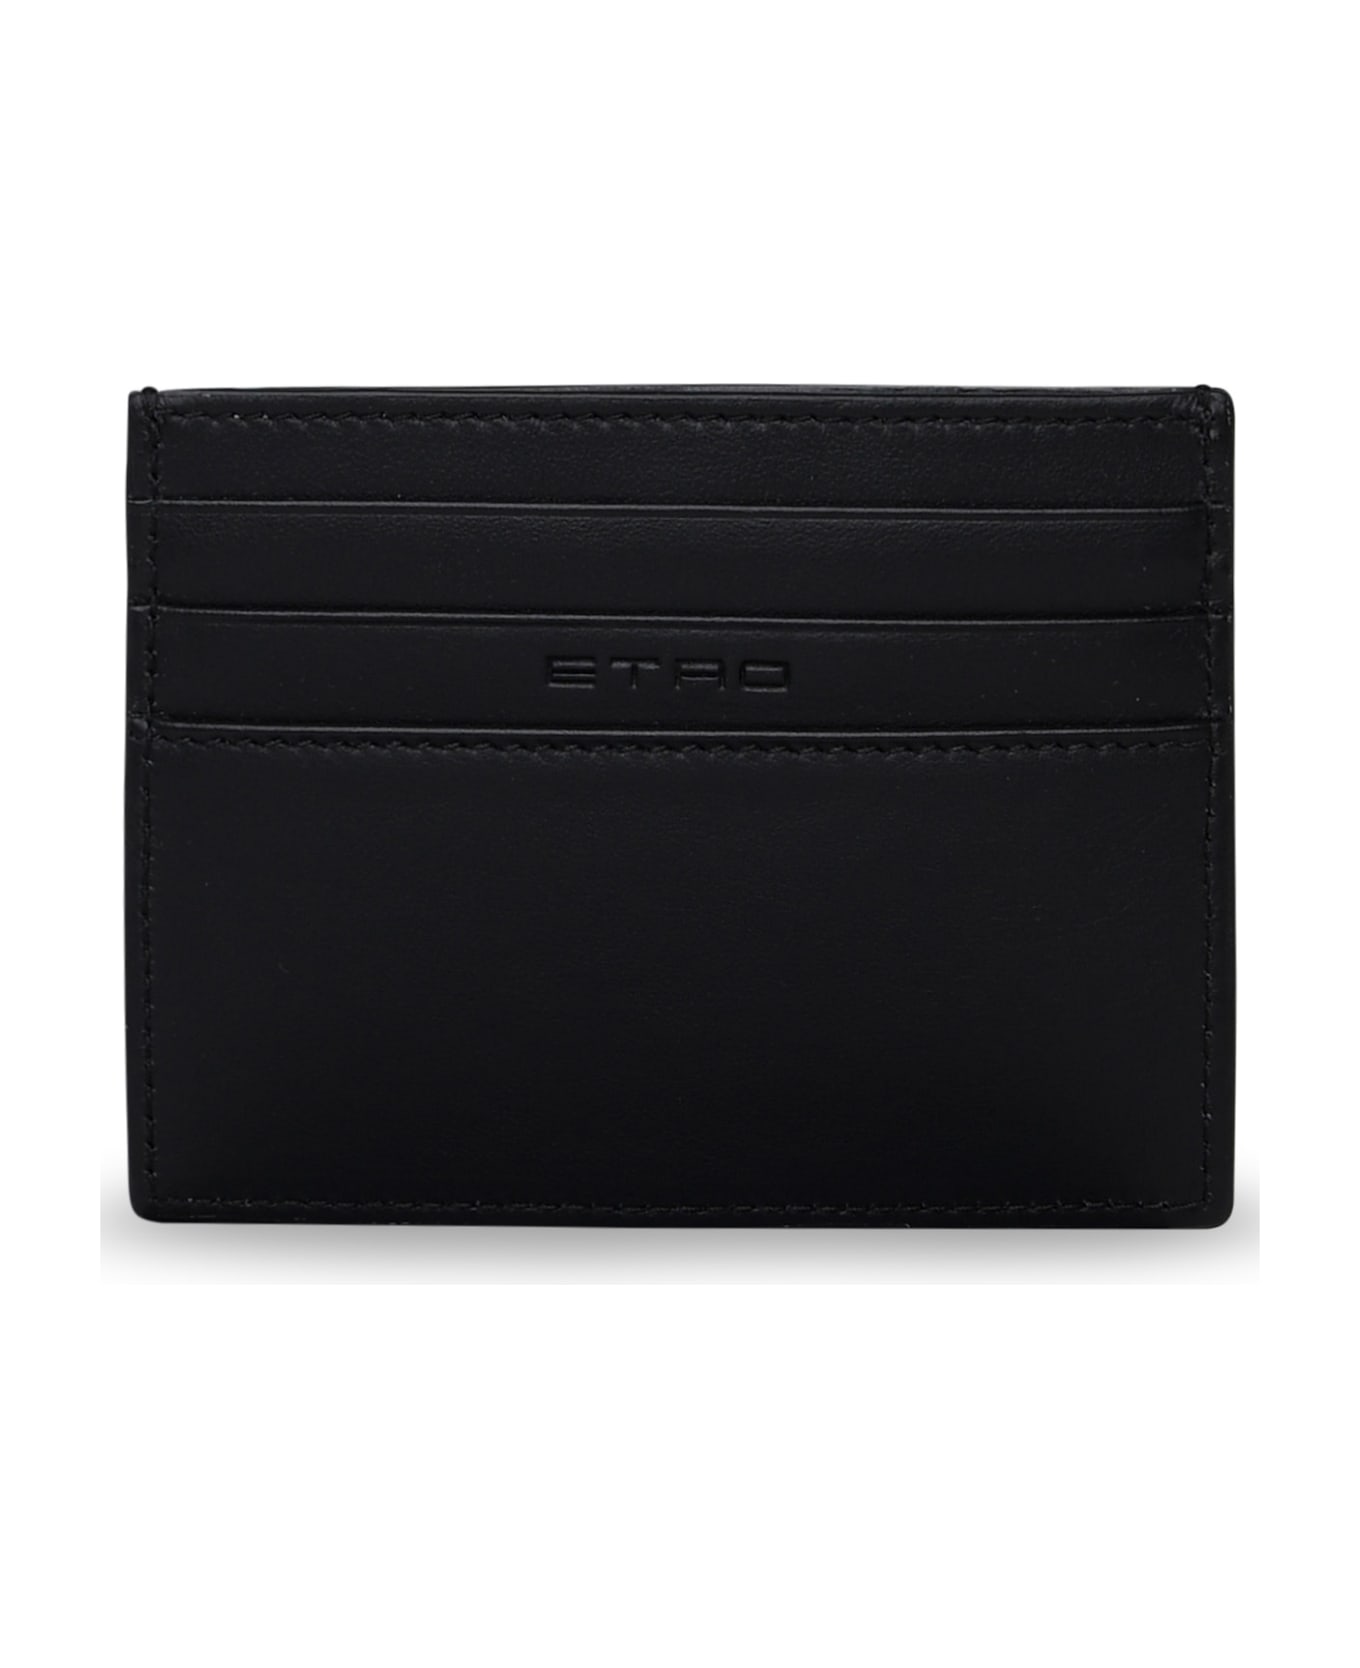 Etro Black Leather Card Holder - Black